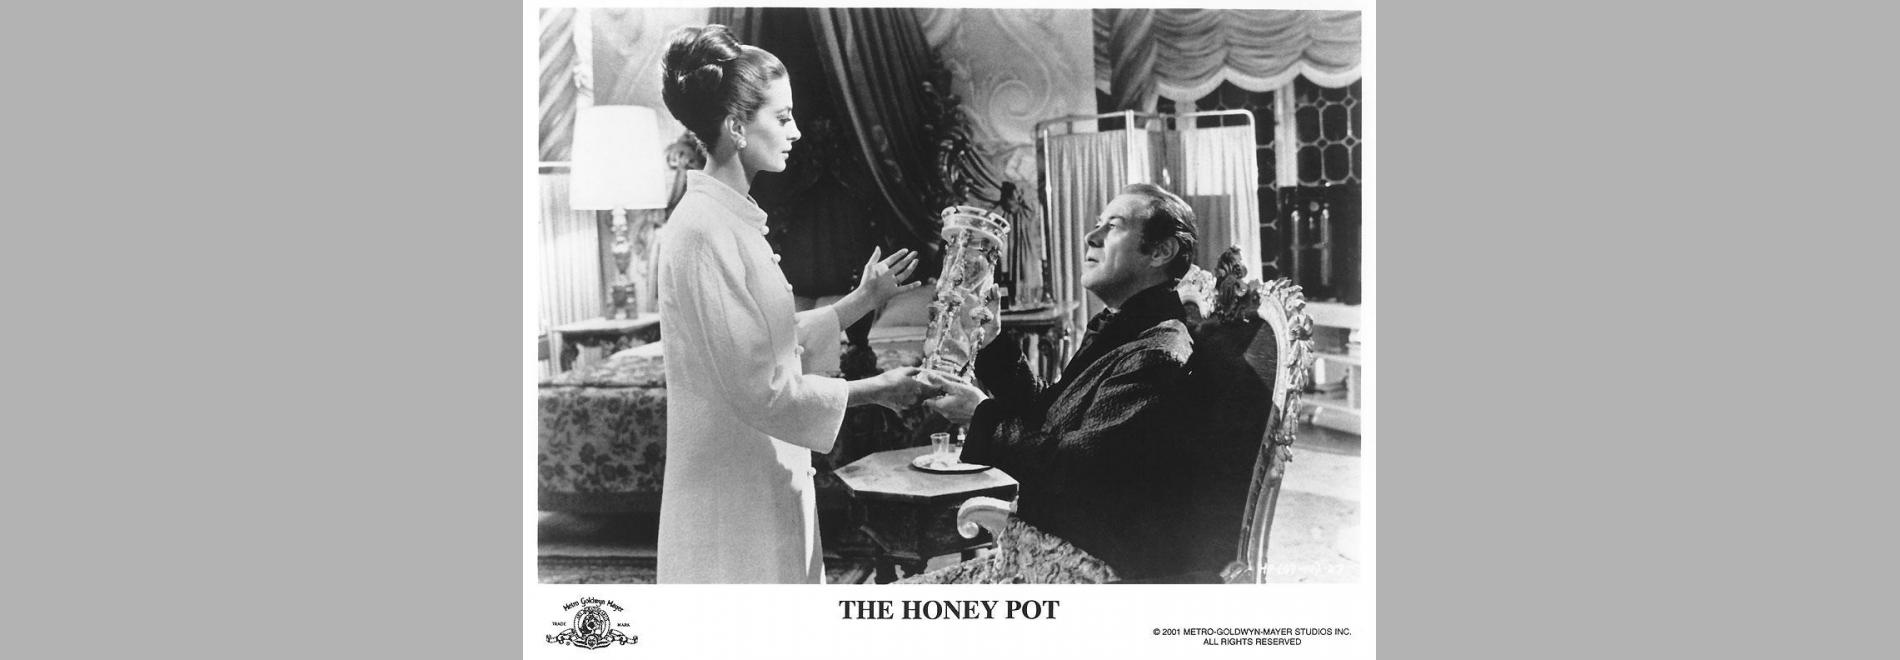 The Honey Pot (Joseph L. Mankiewicz, 1947)